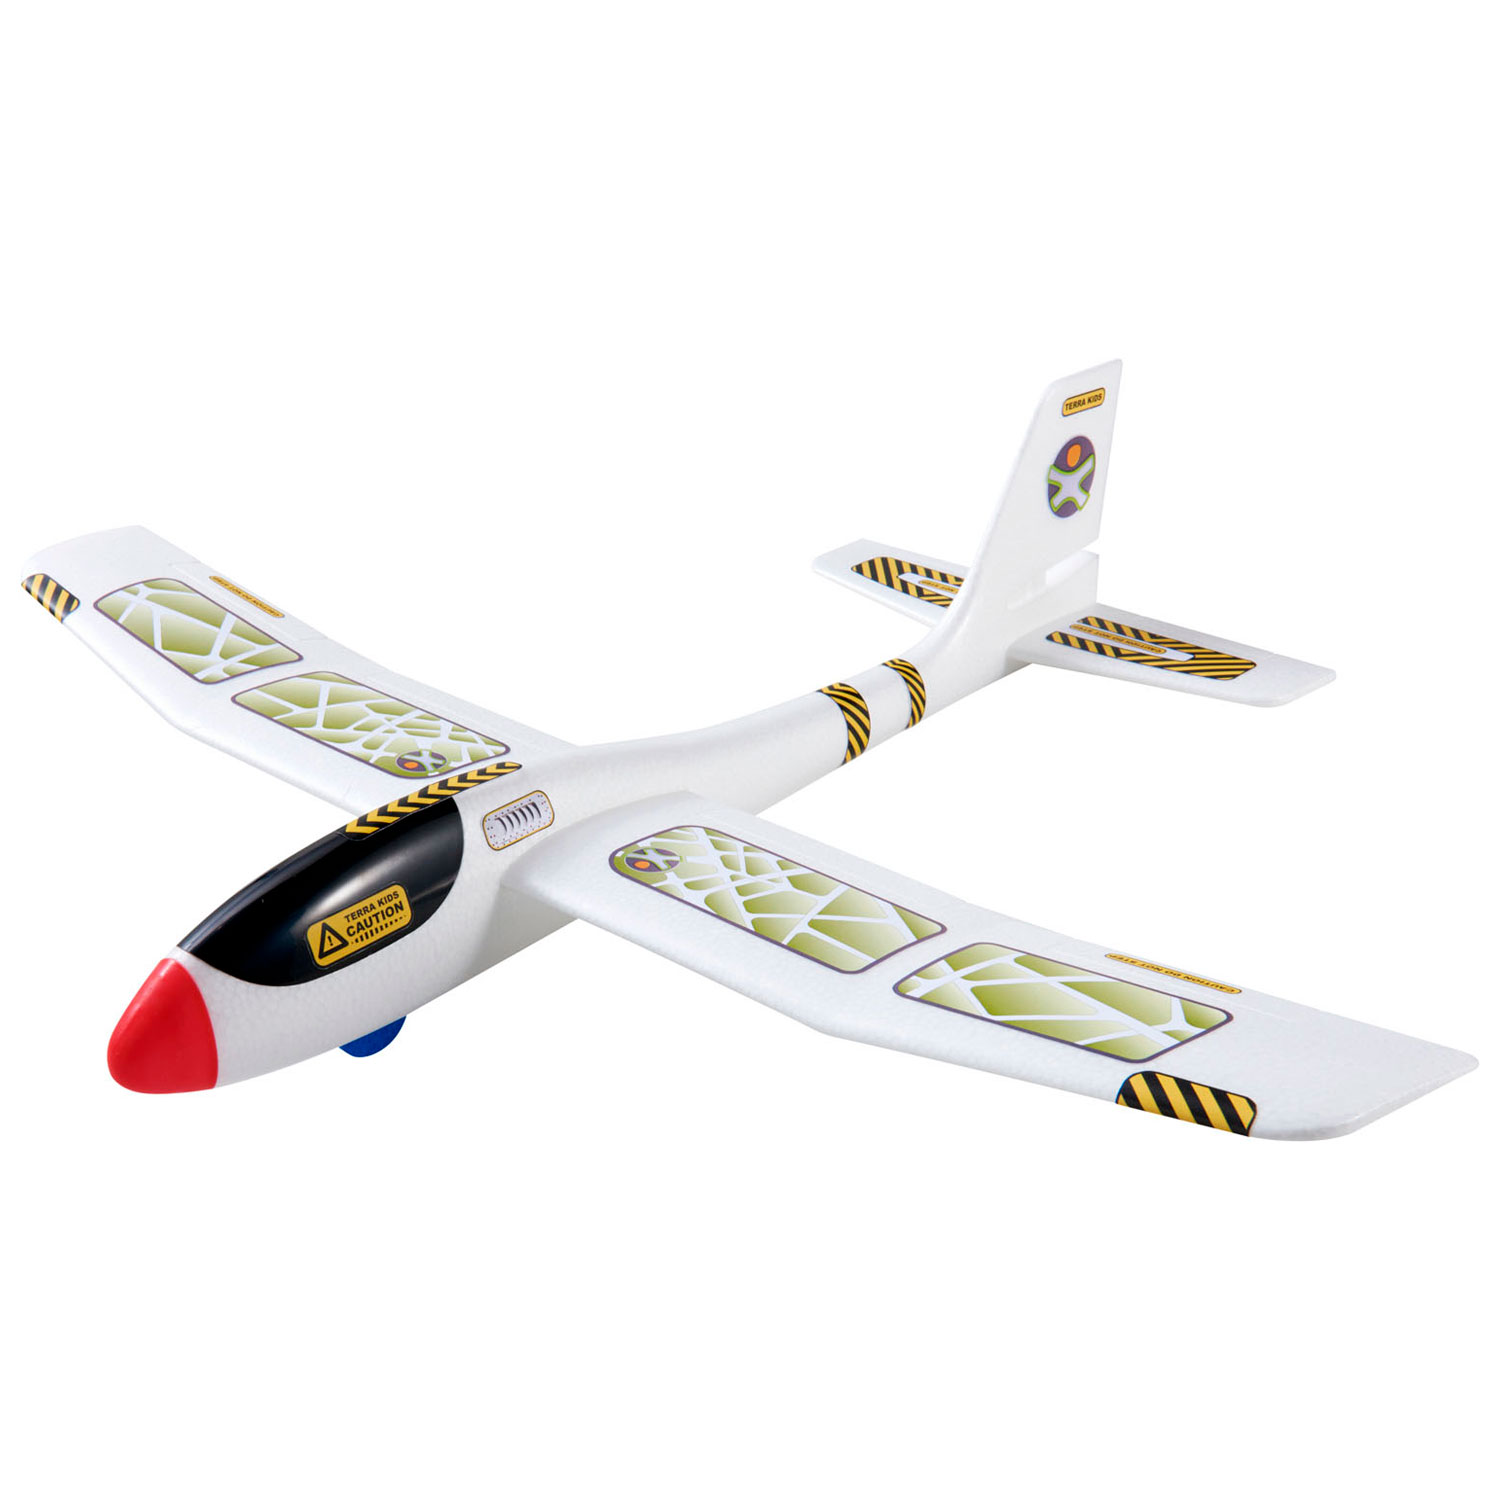 Haba Terra Kids - Maxi avion à lancer